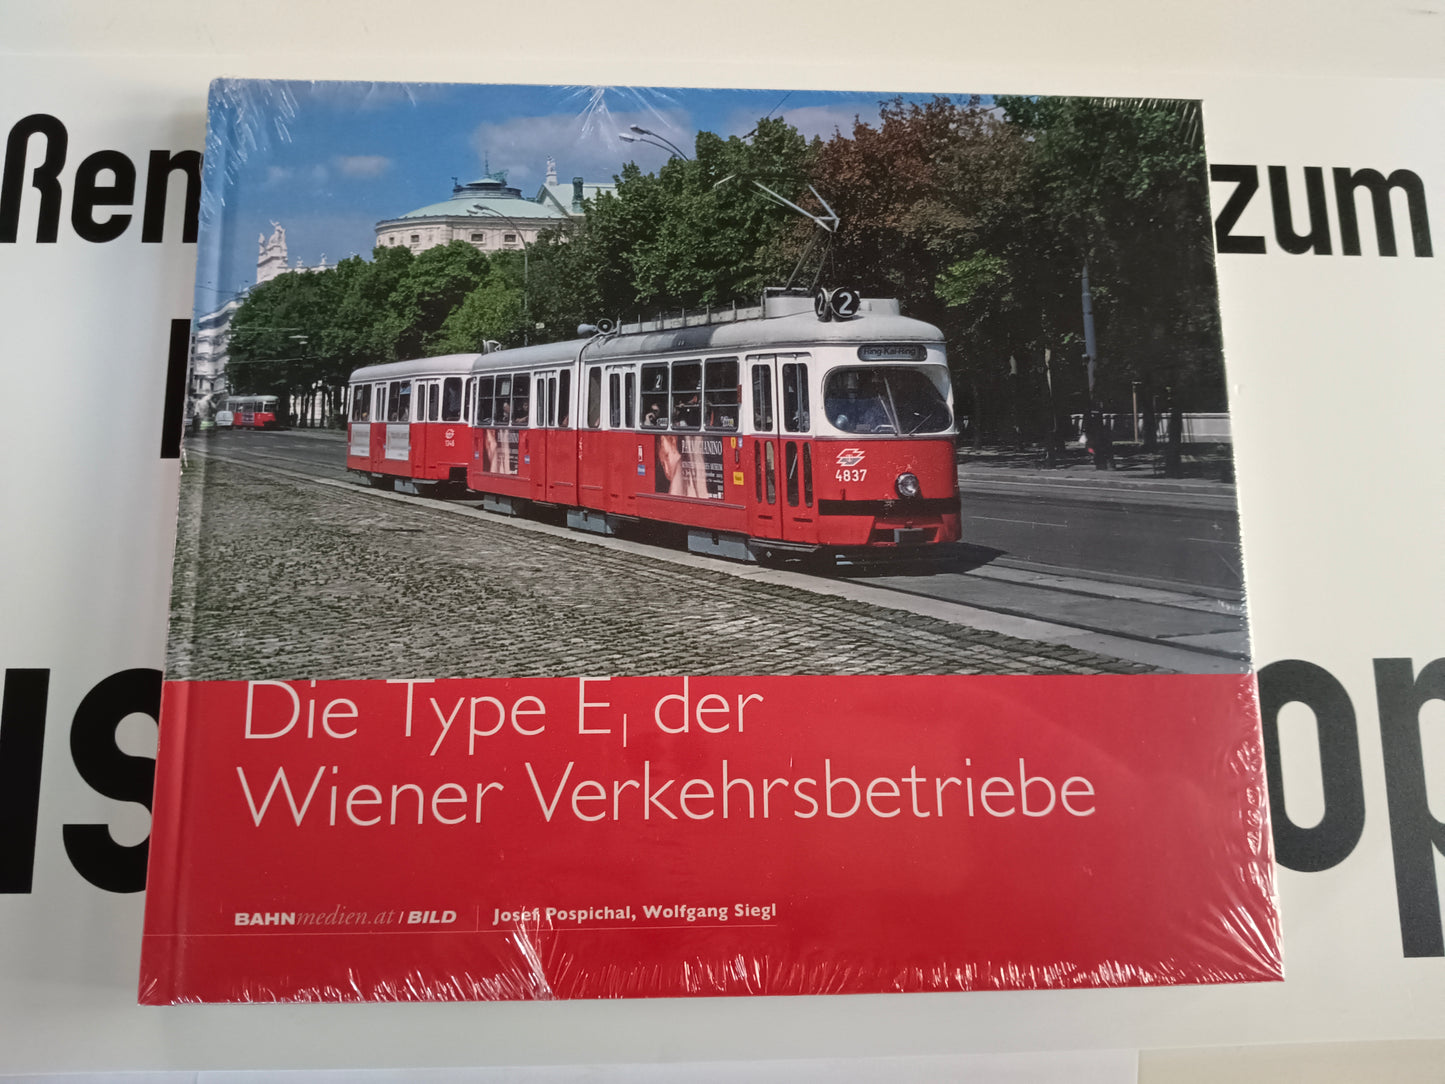 Die Type E1 der Wiener Verkehrsbetriebe